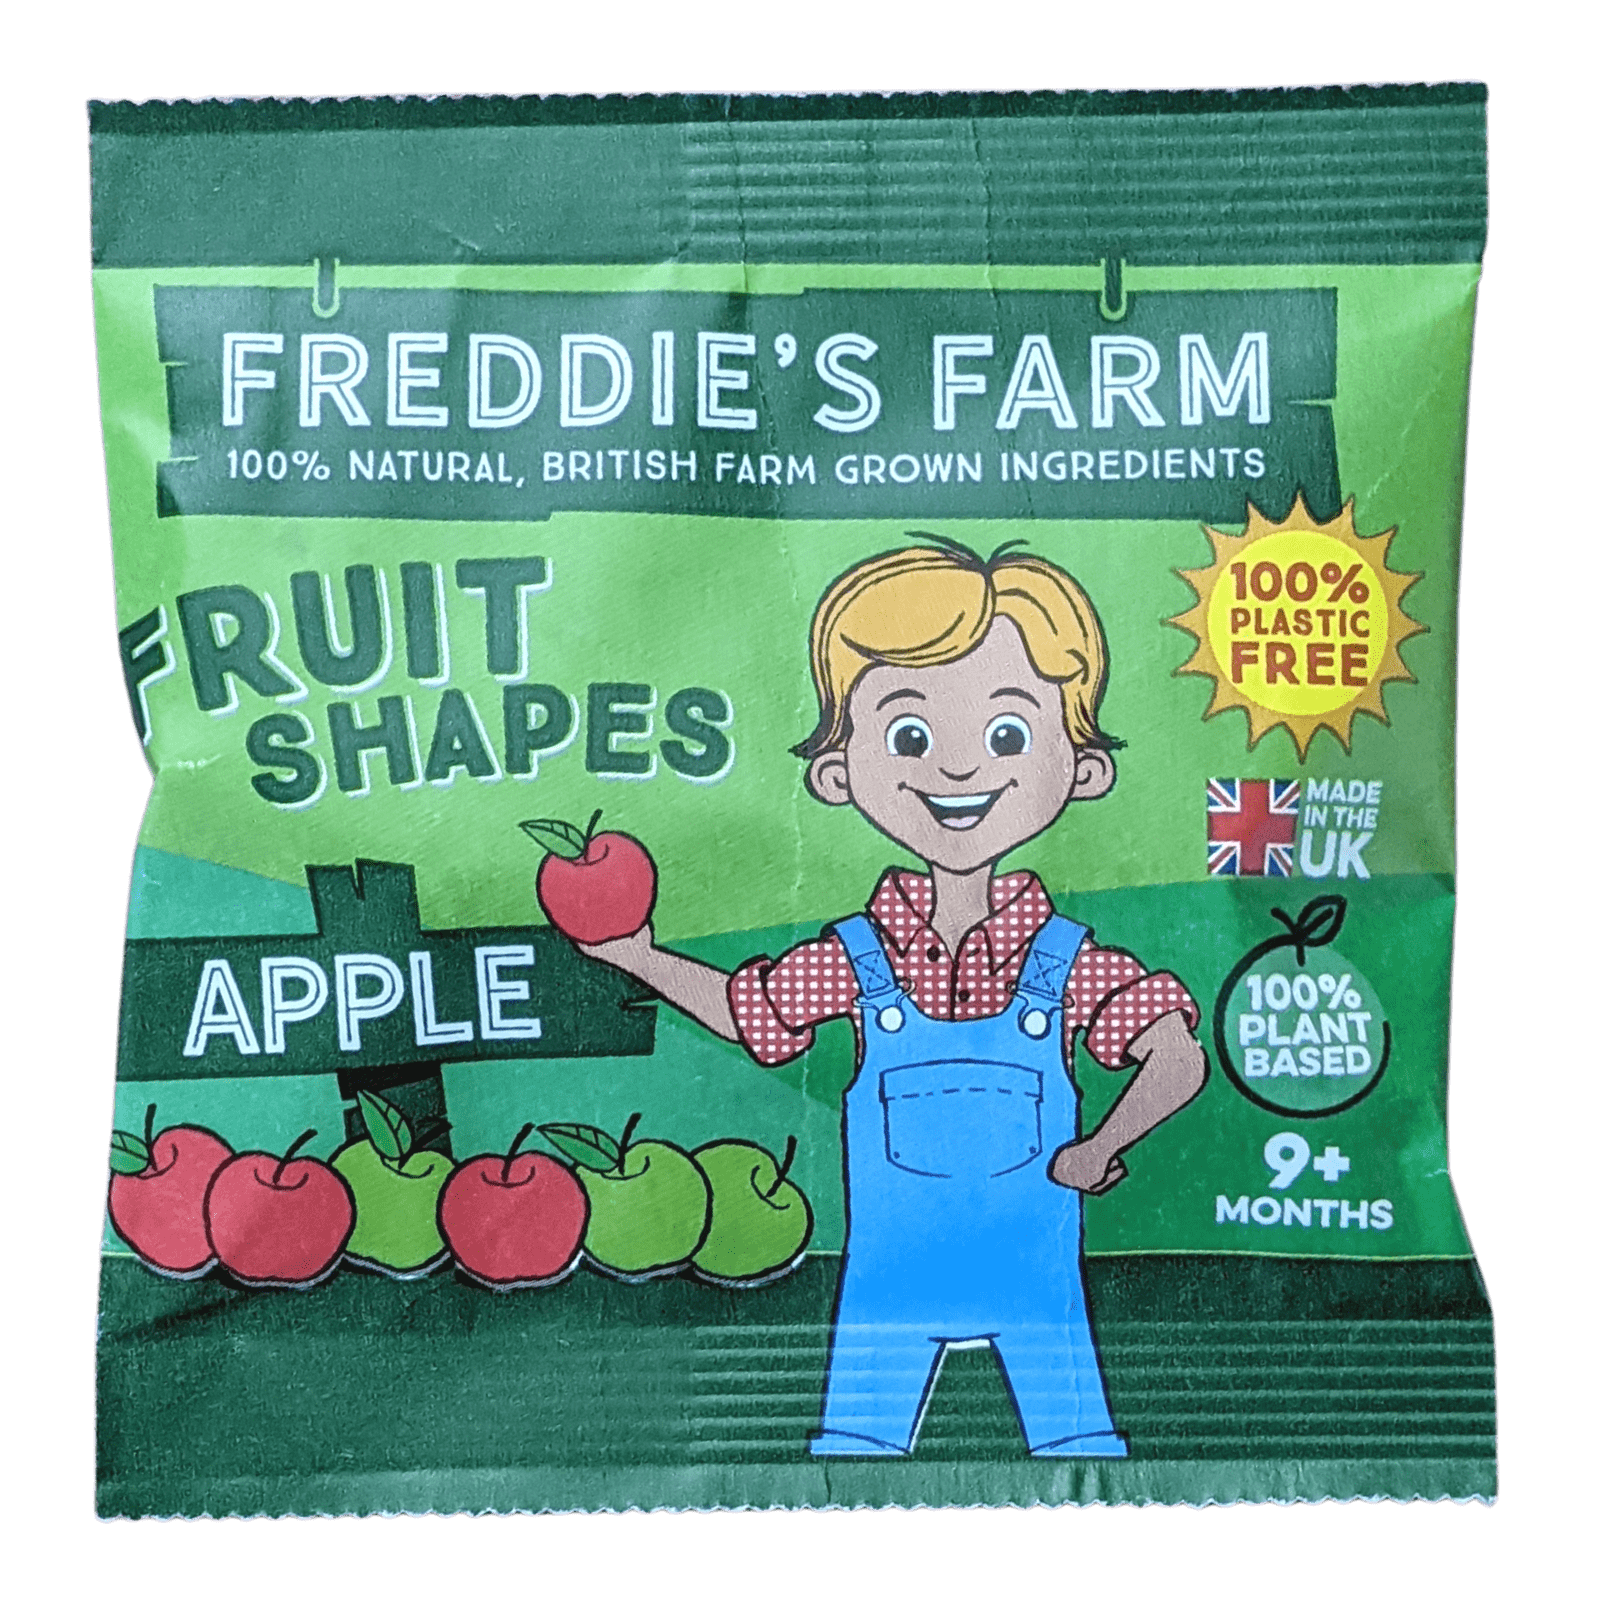 Freddie's Farm Fruit Shapes - Apple - CDU (16 x 20g packets plastic free packets) - NEW